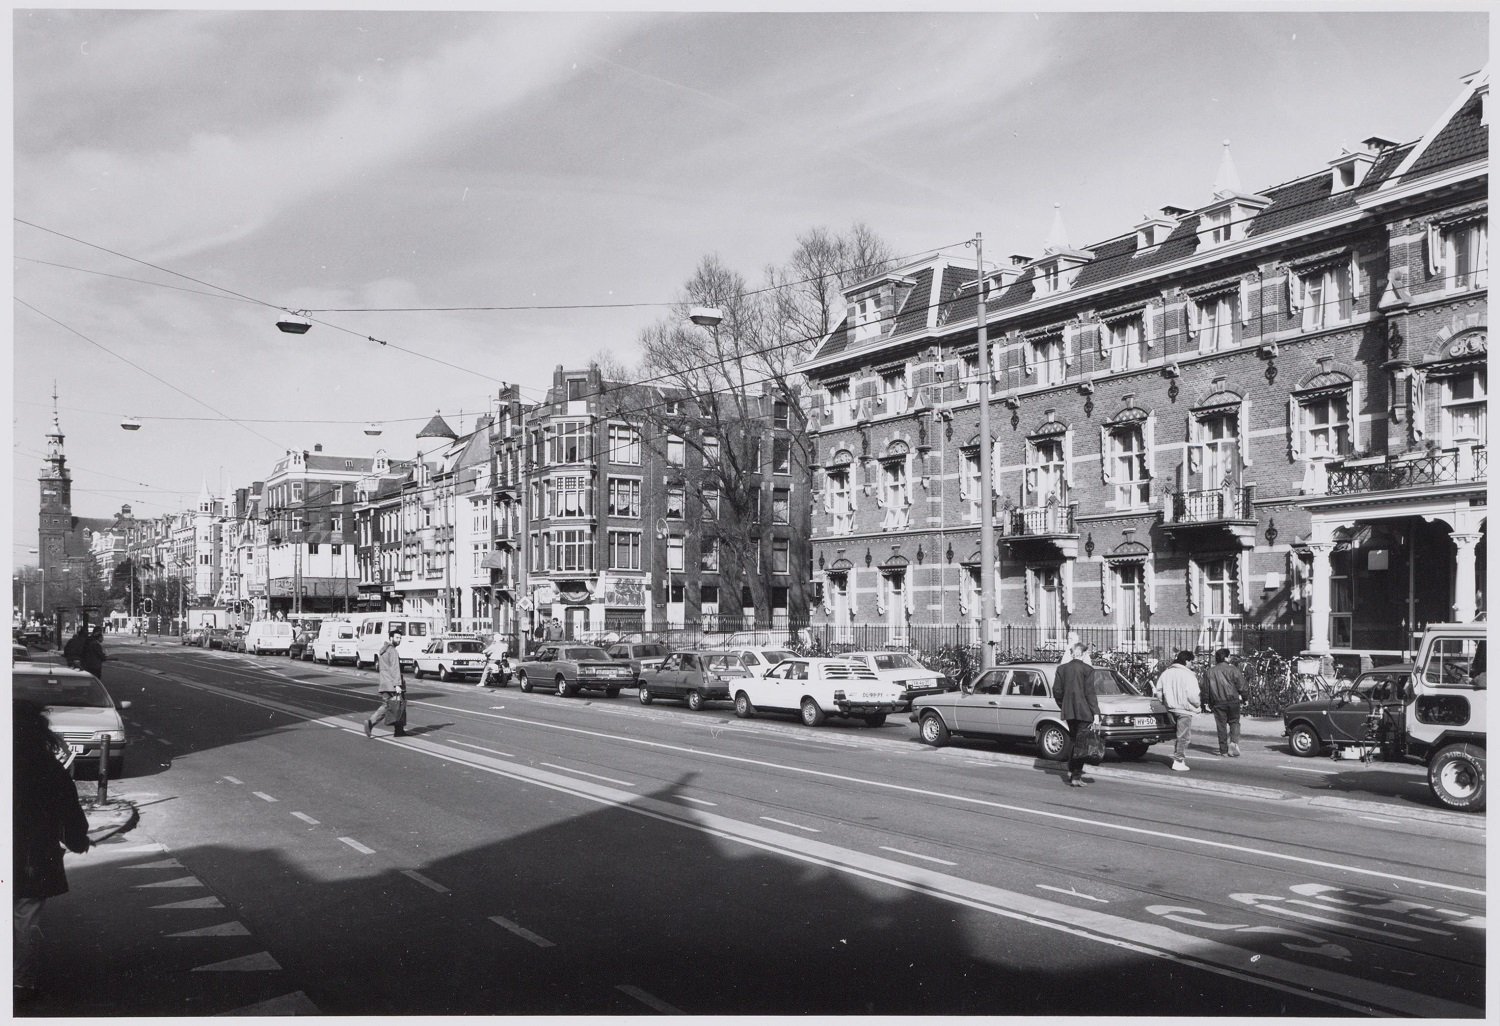 Historie-the-manor-amsterdam-burgerziekenhuis-image-4.jpg